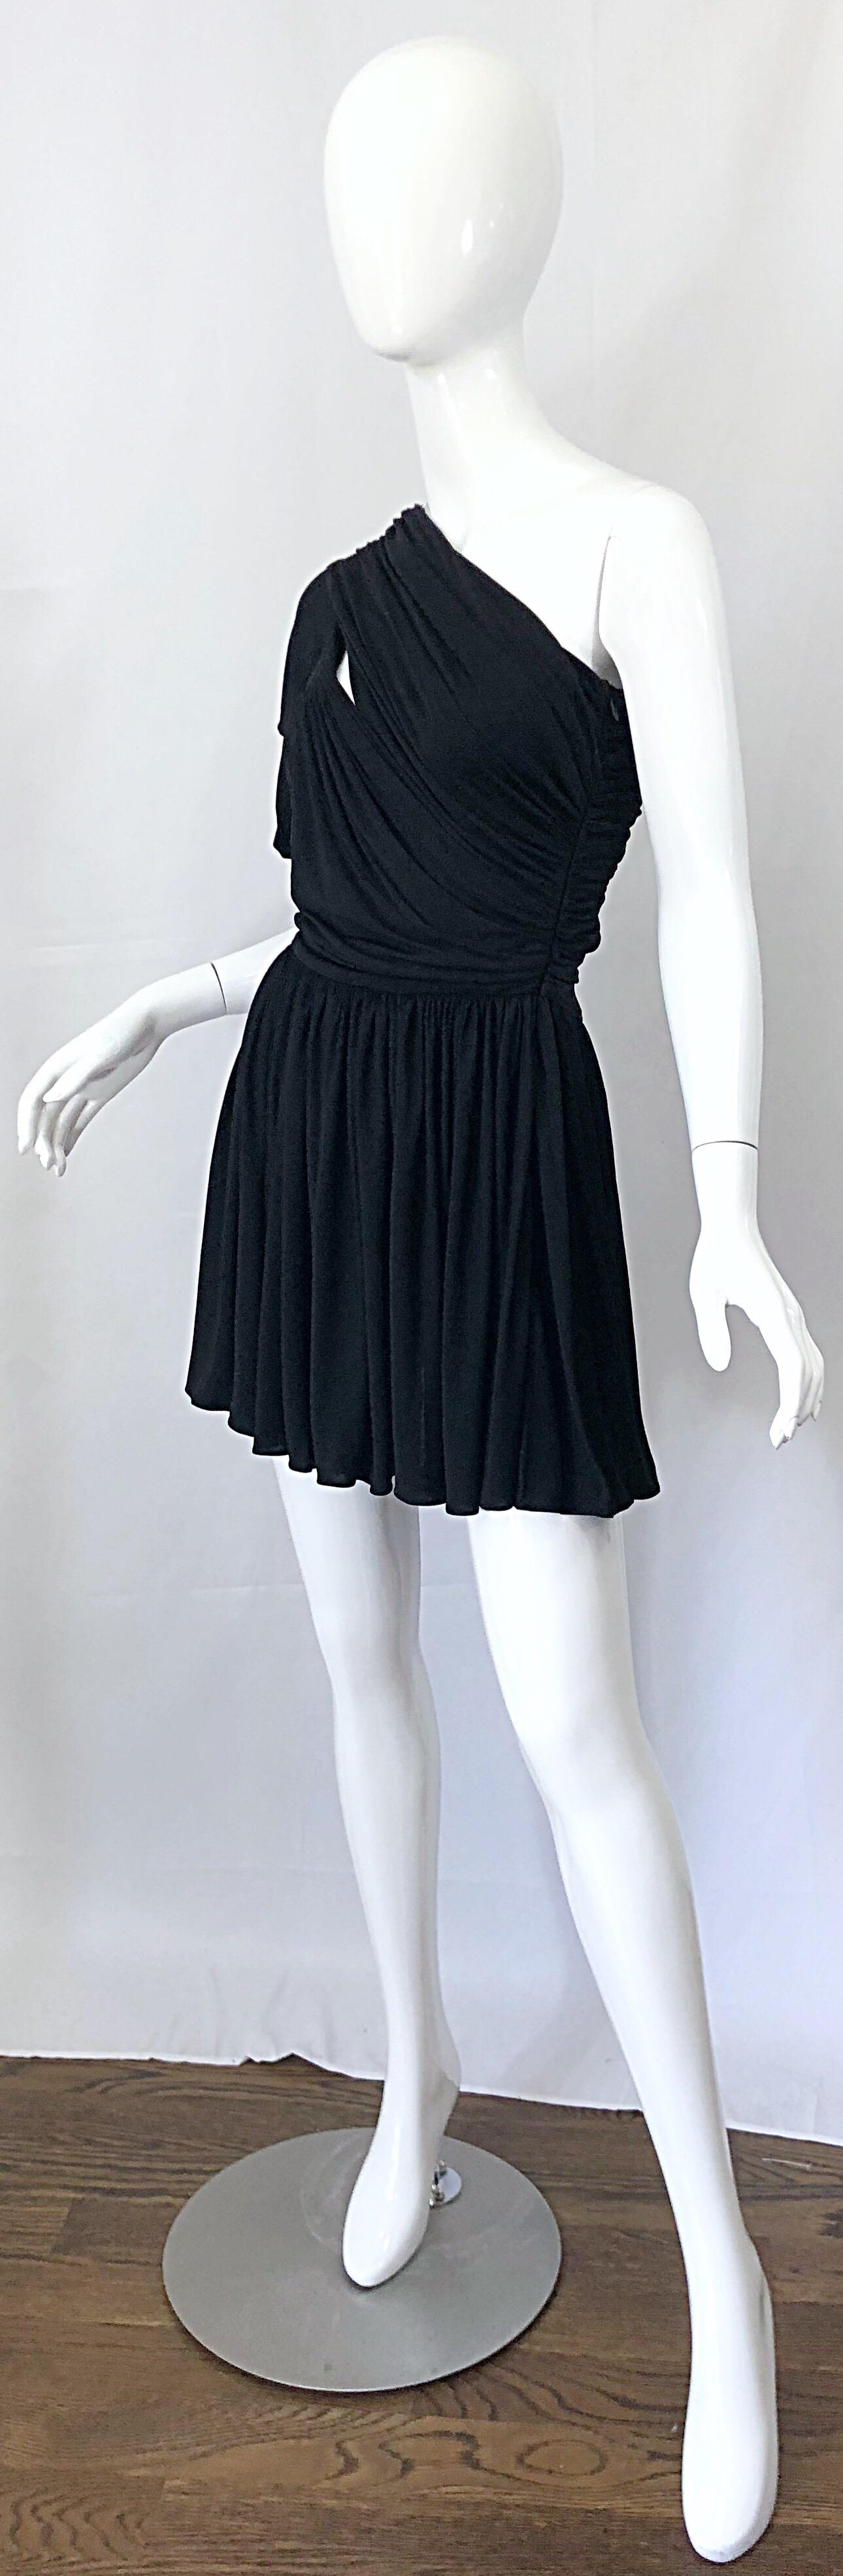 John Galliano Sz 42 6 / 8 2000s Black One Shoulder Grecian Vintage Mini Dress For Sale 1